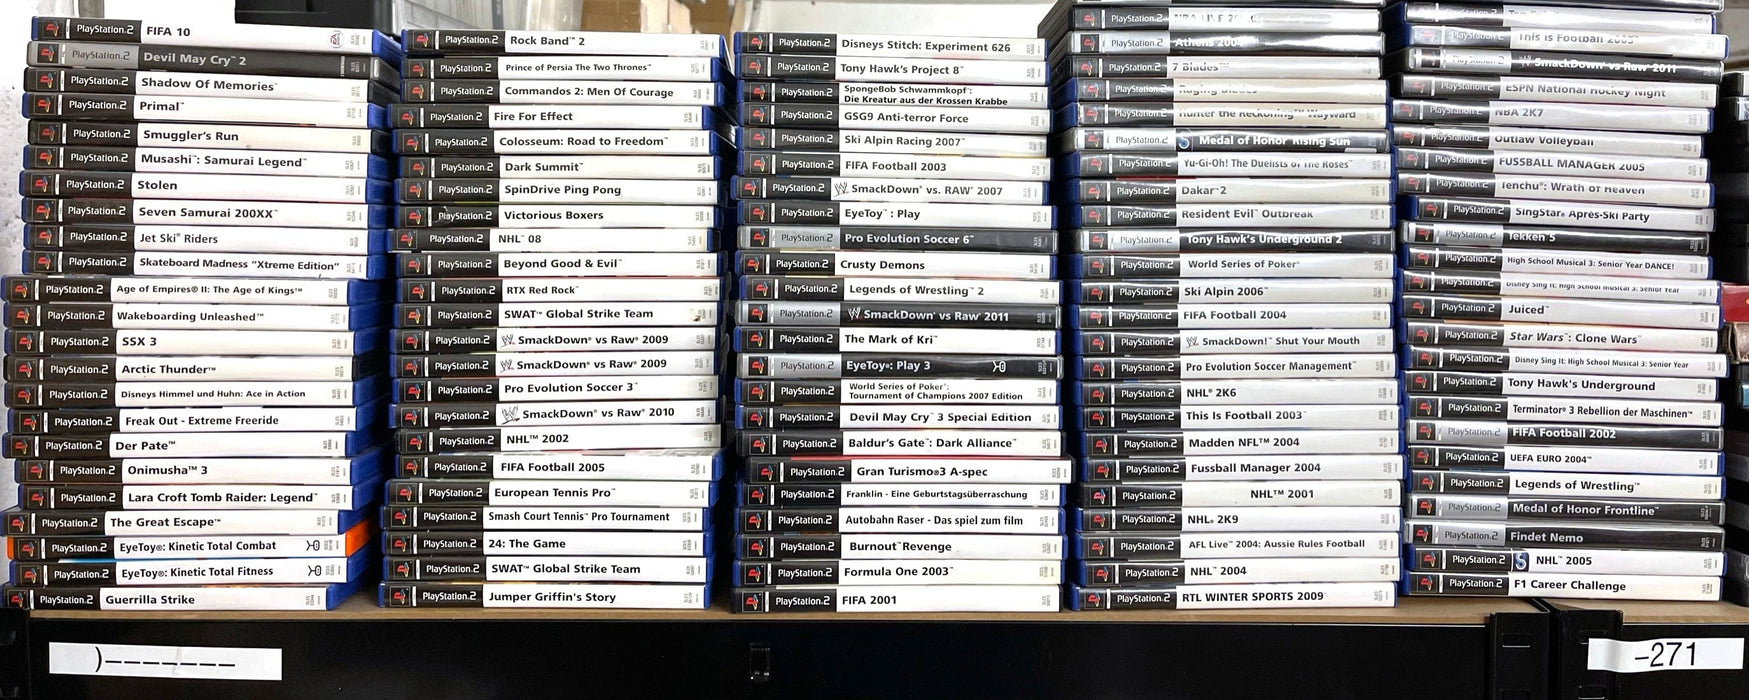 Glaciergames PlayStation 2 Game Medal of Honor: Rising Sun PlayStation 2 (Nr.1162)